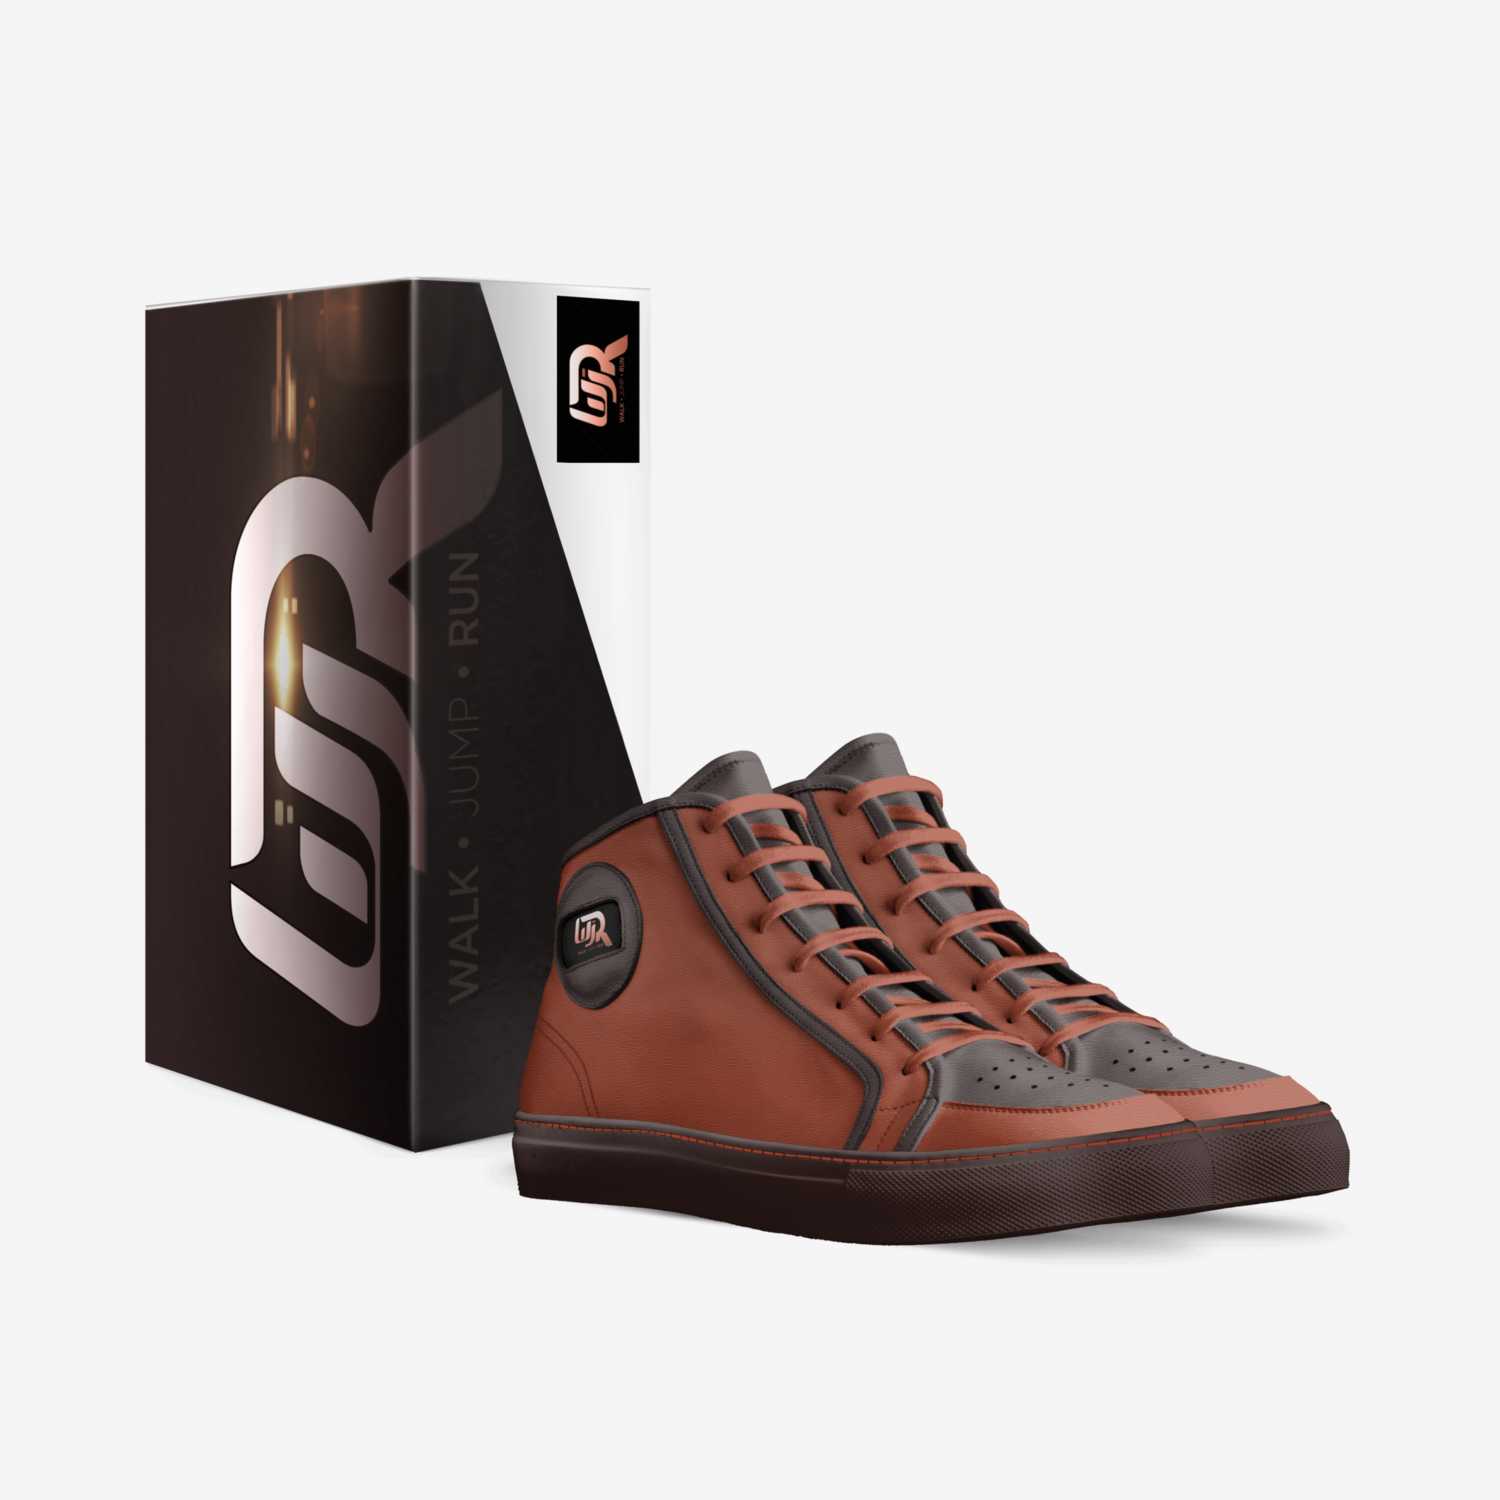 WALK • JUMP • RUN custom made in Italy shoes by Wayne Robinson | Box view